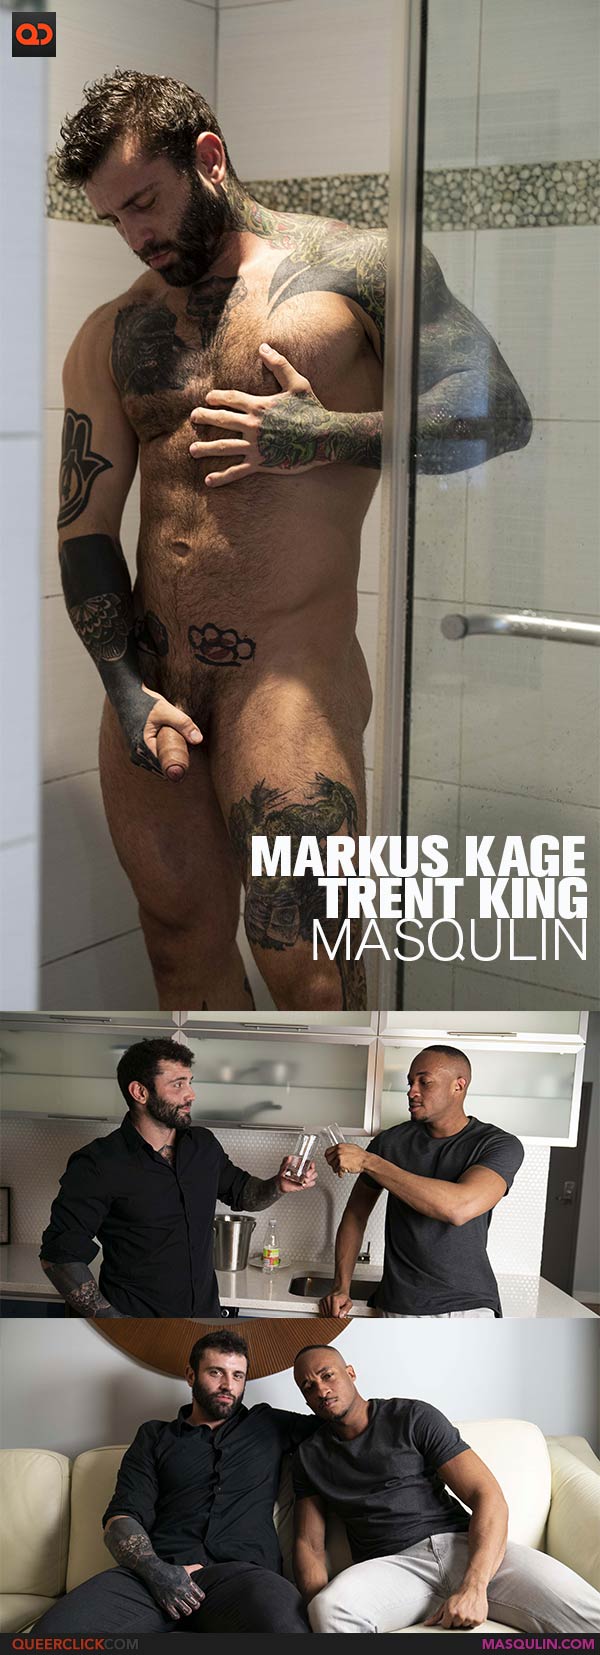 Masqulin: Markus Kage and Trent King